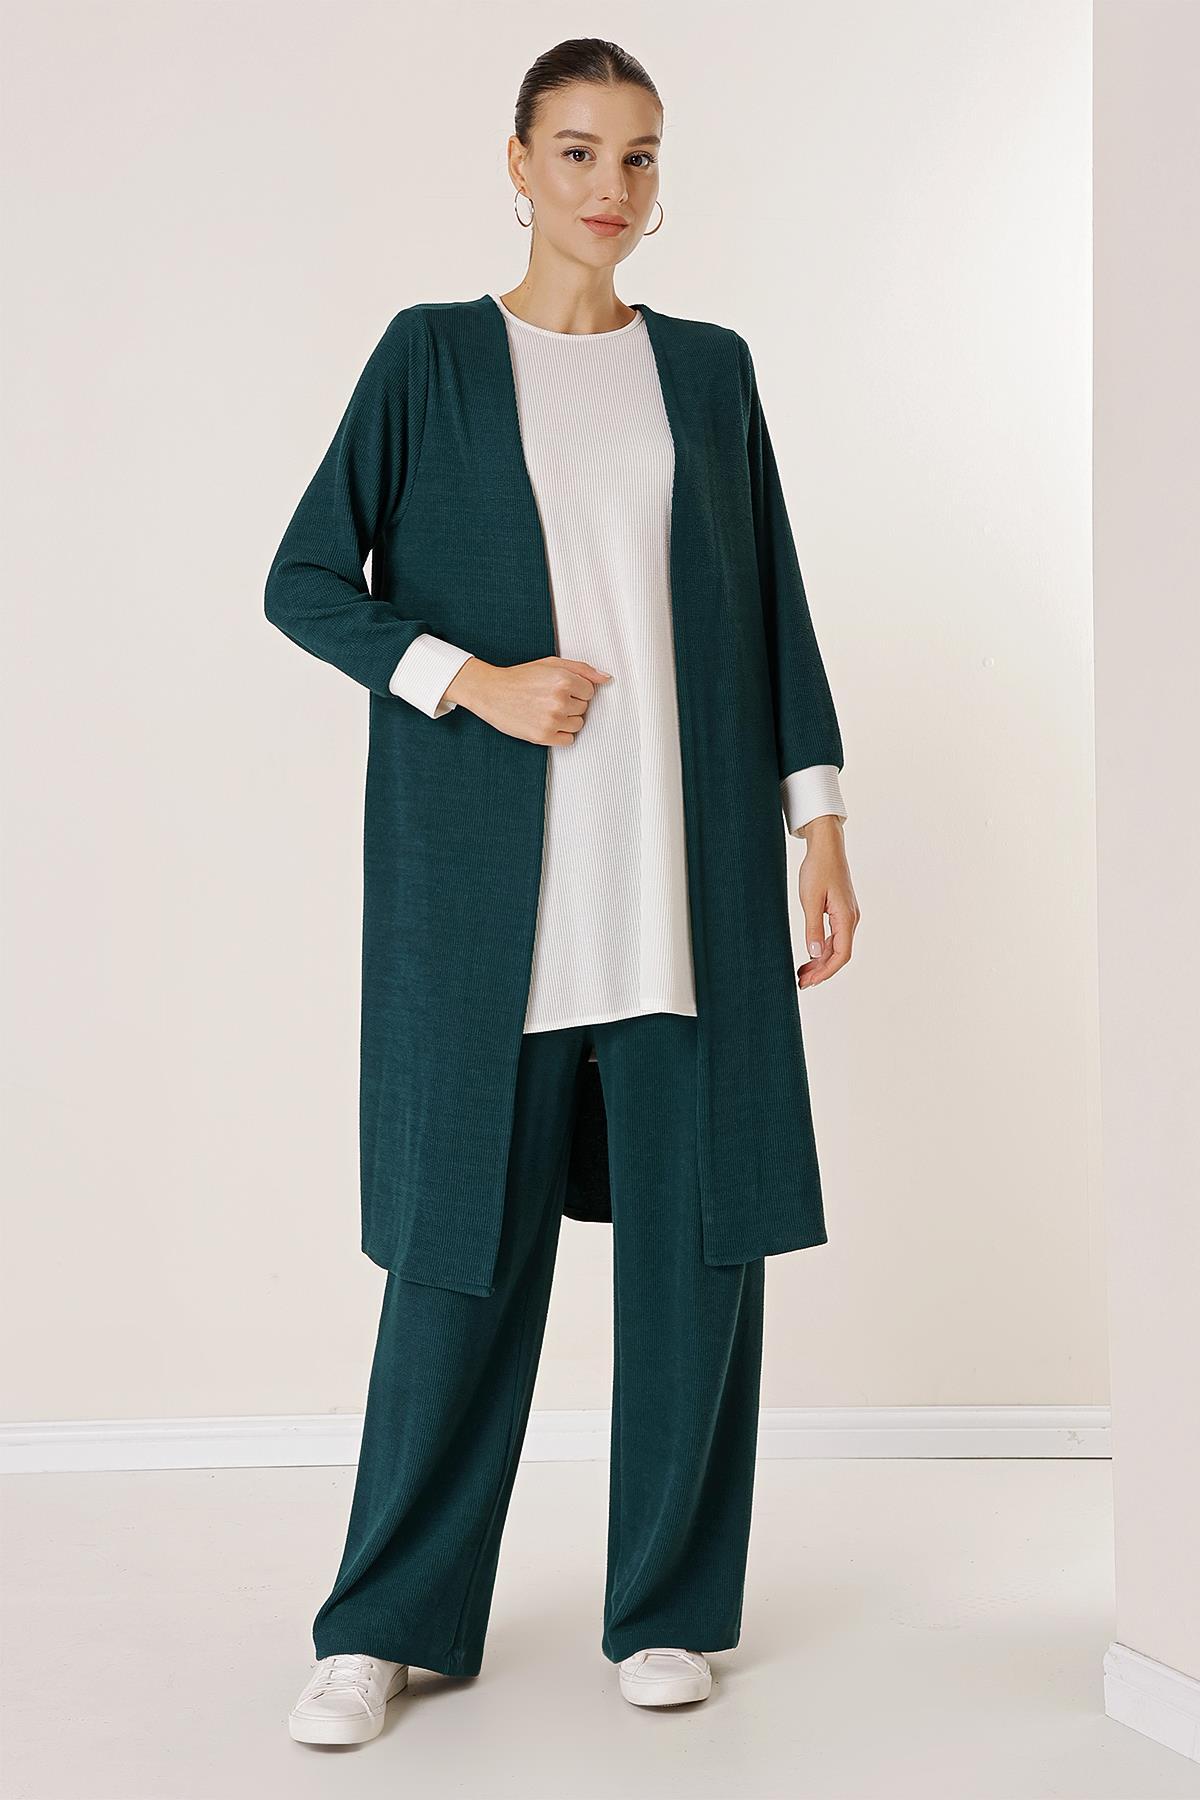 Levně By Saygı Sleeveless Tunic Elastic Waist Trousers Long Cardigan Knitted 3-Piece Suit